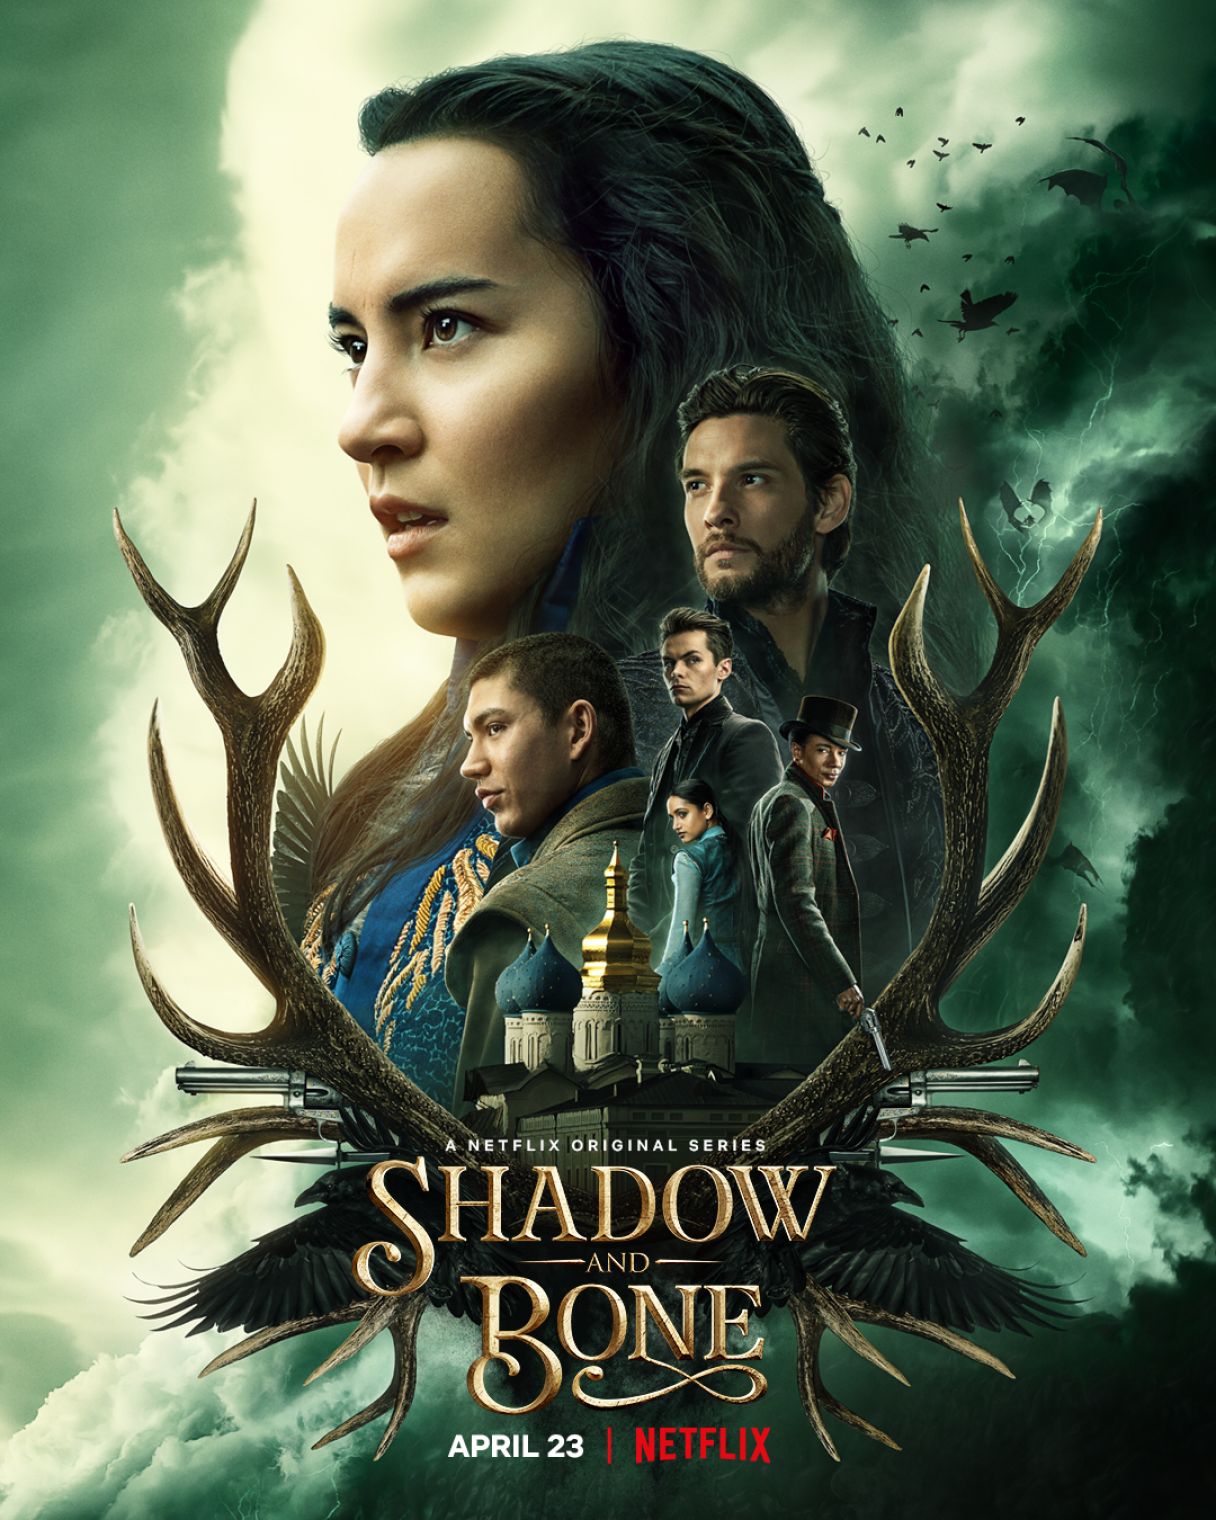 Finally here; Shadow & Bone premieres on Netflix on Friday 23rd April starring Freddy Carter as Kaz Brekker.